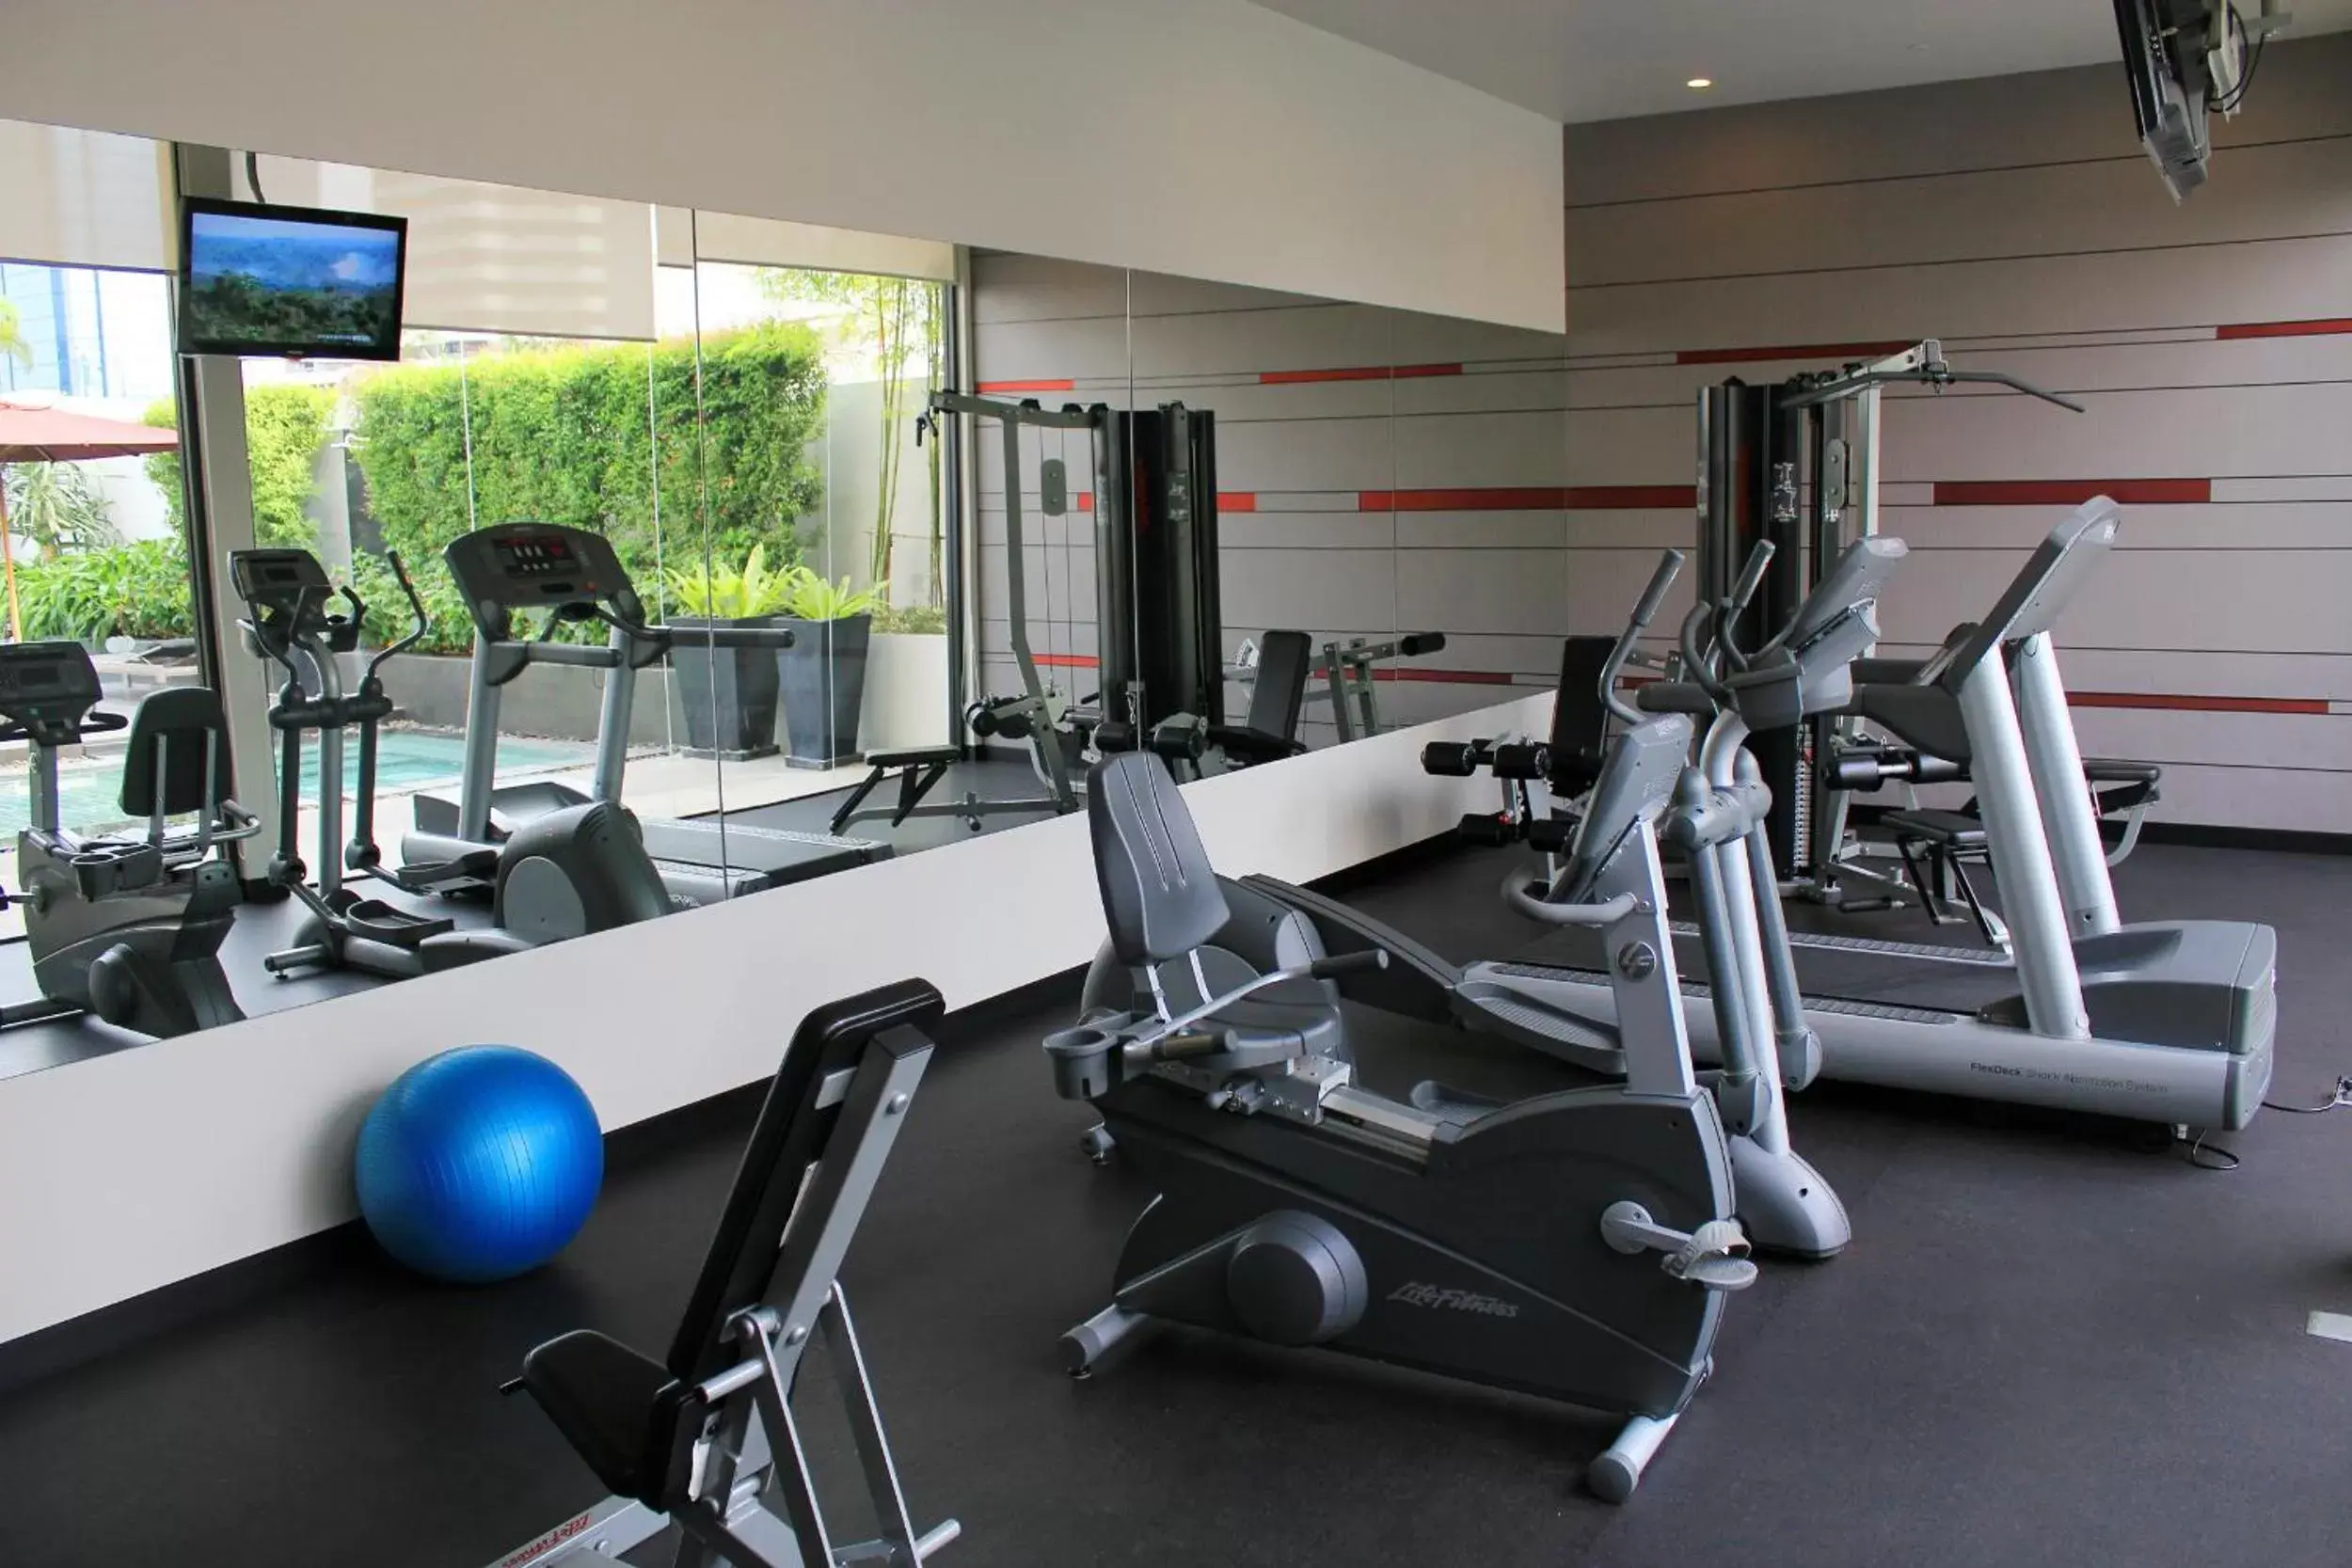 Fitness centre/facilities, Fitness Center/Facilities in Park Plaza Bangkok Soi 18